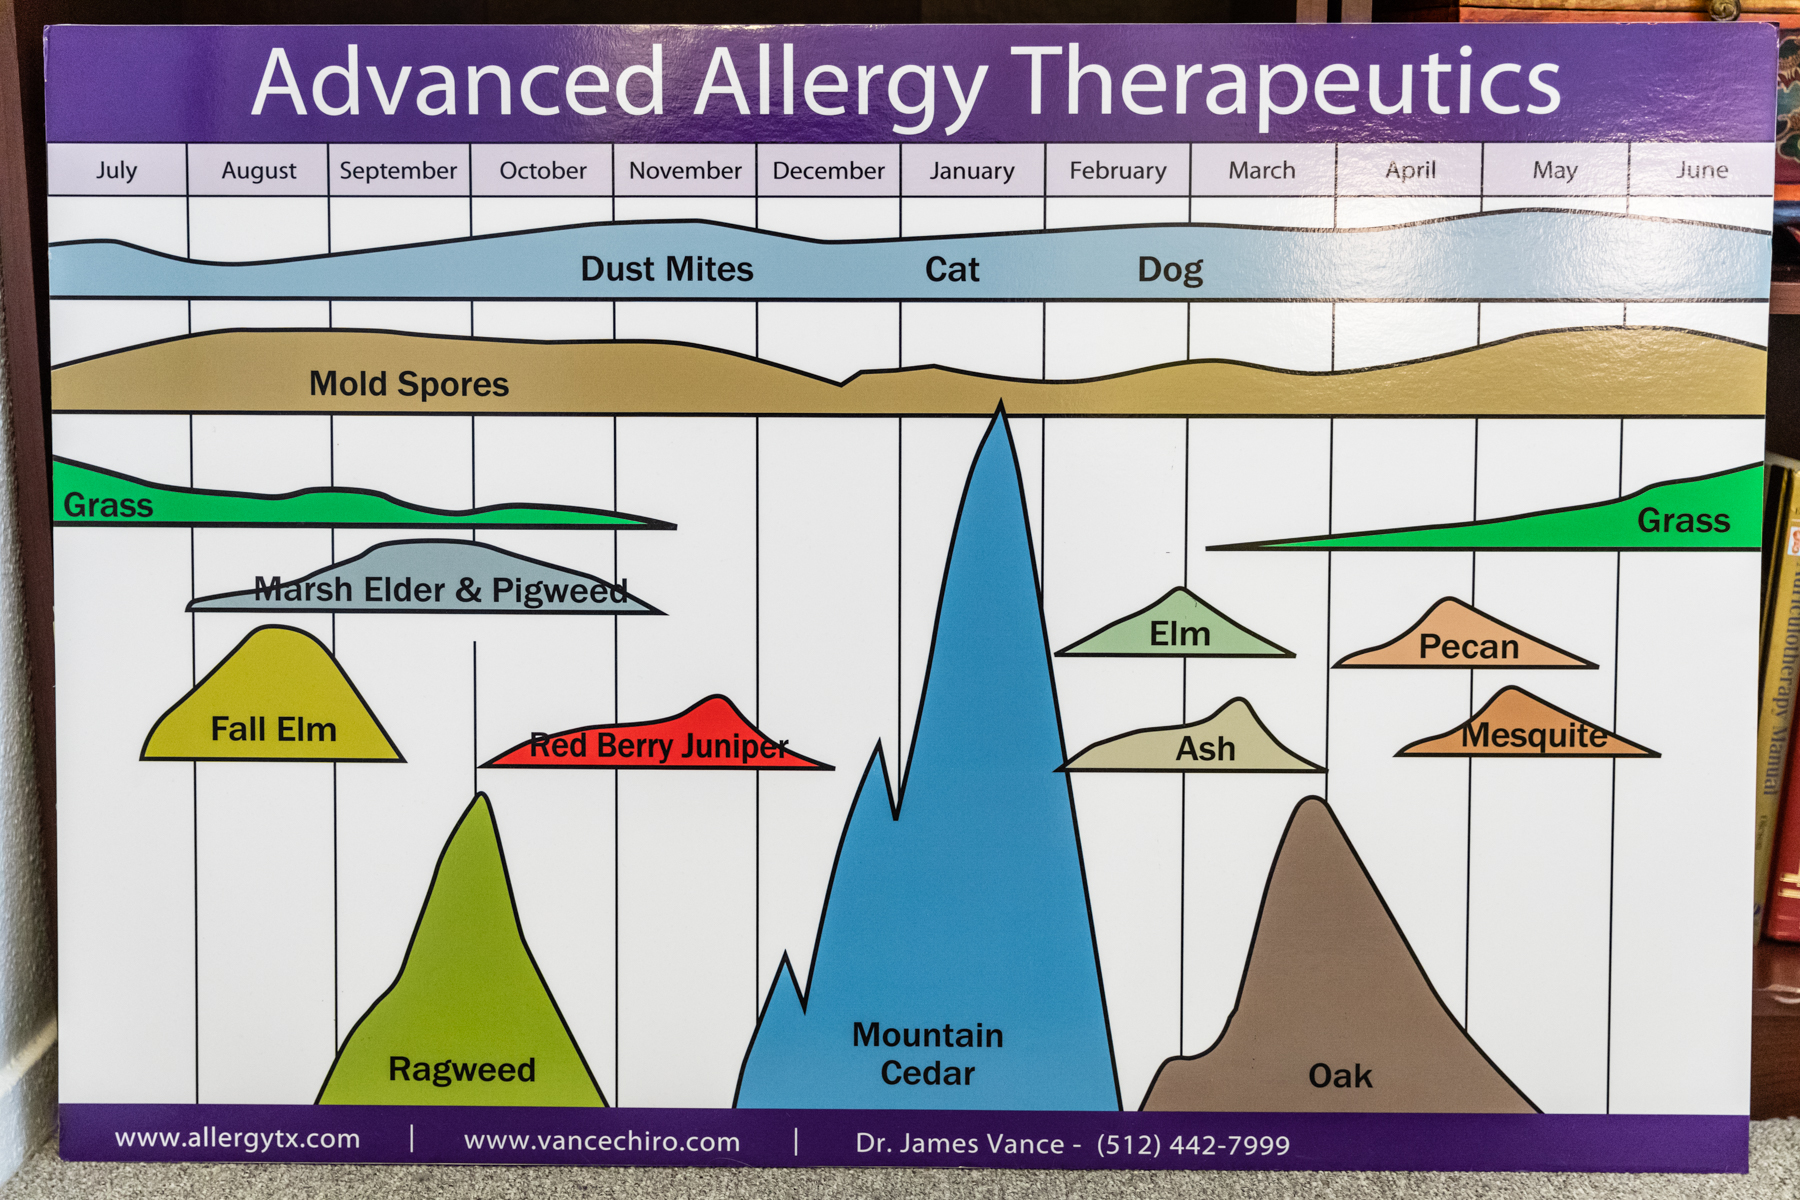 Advanced allergy therapeutics chart